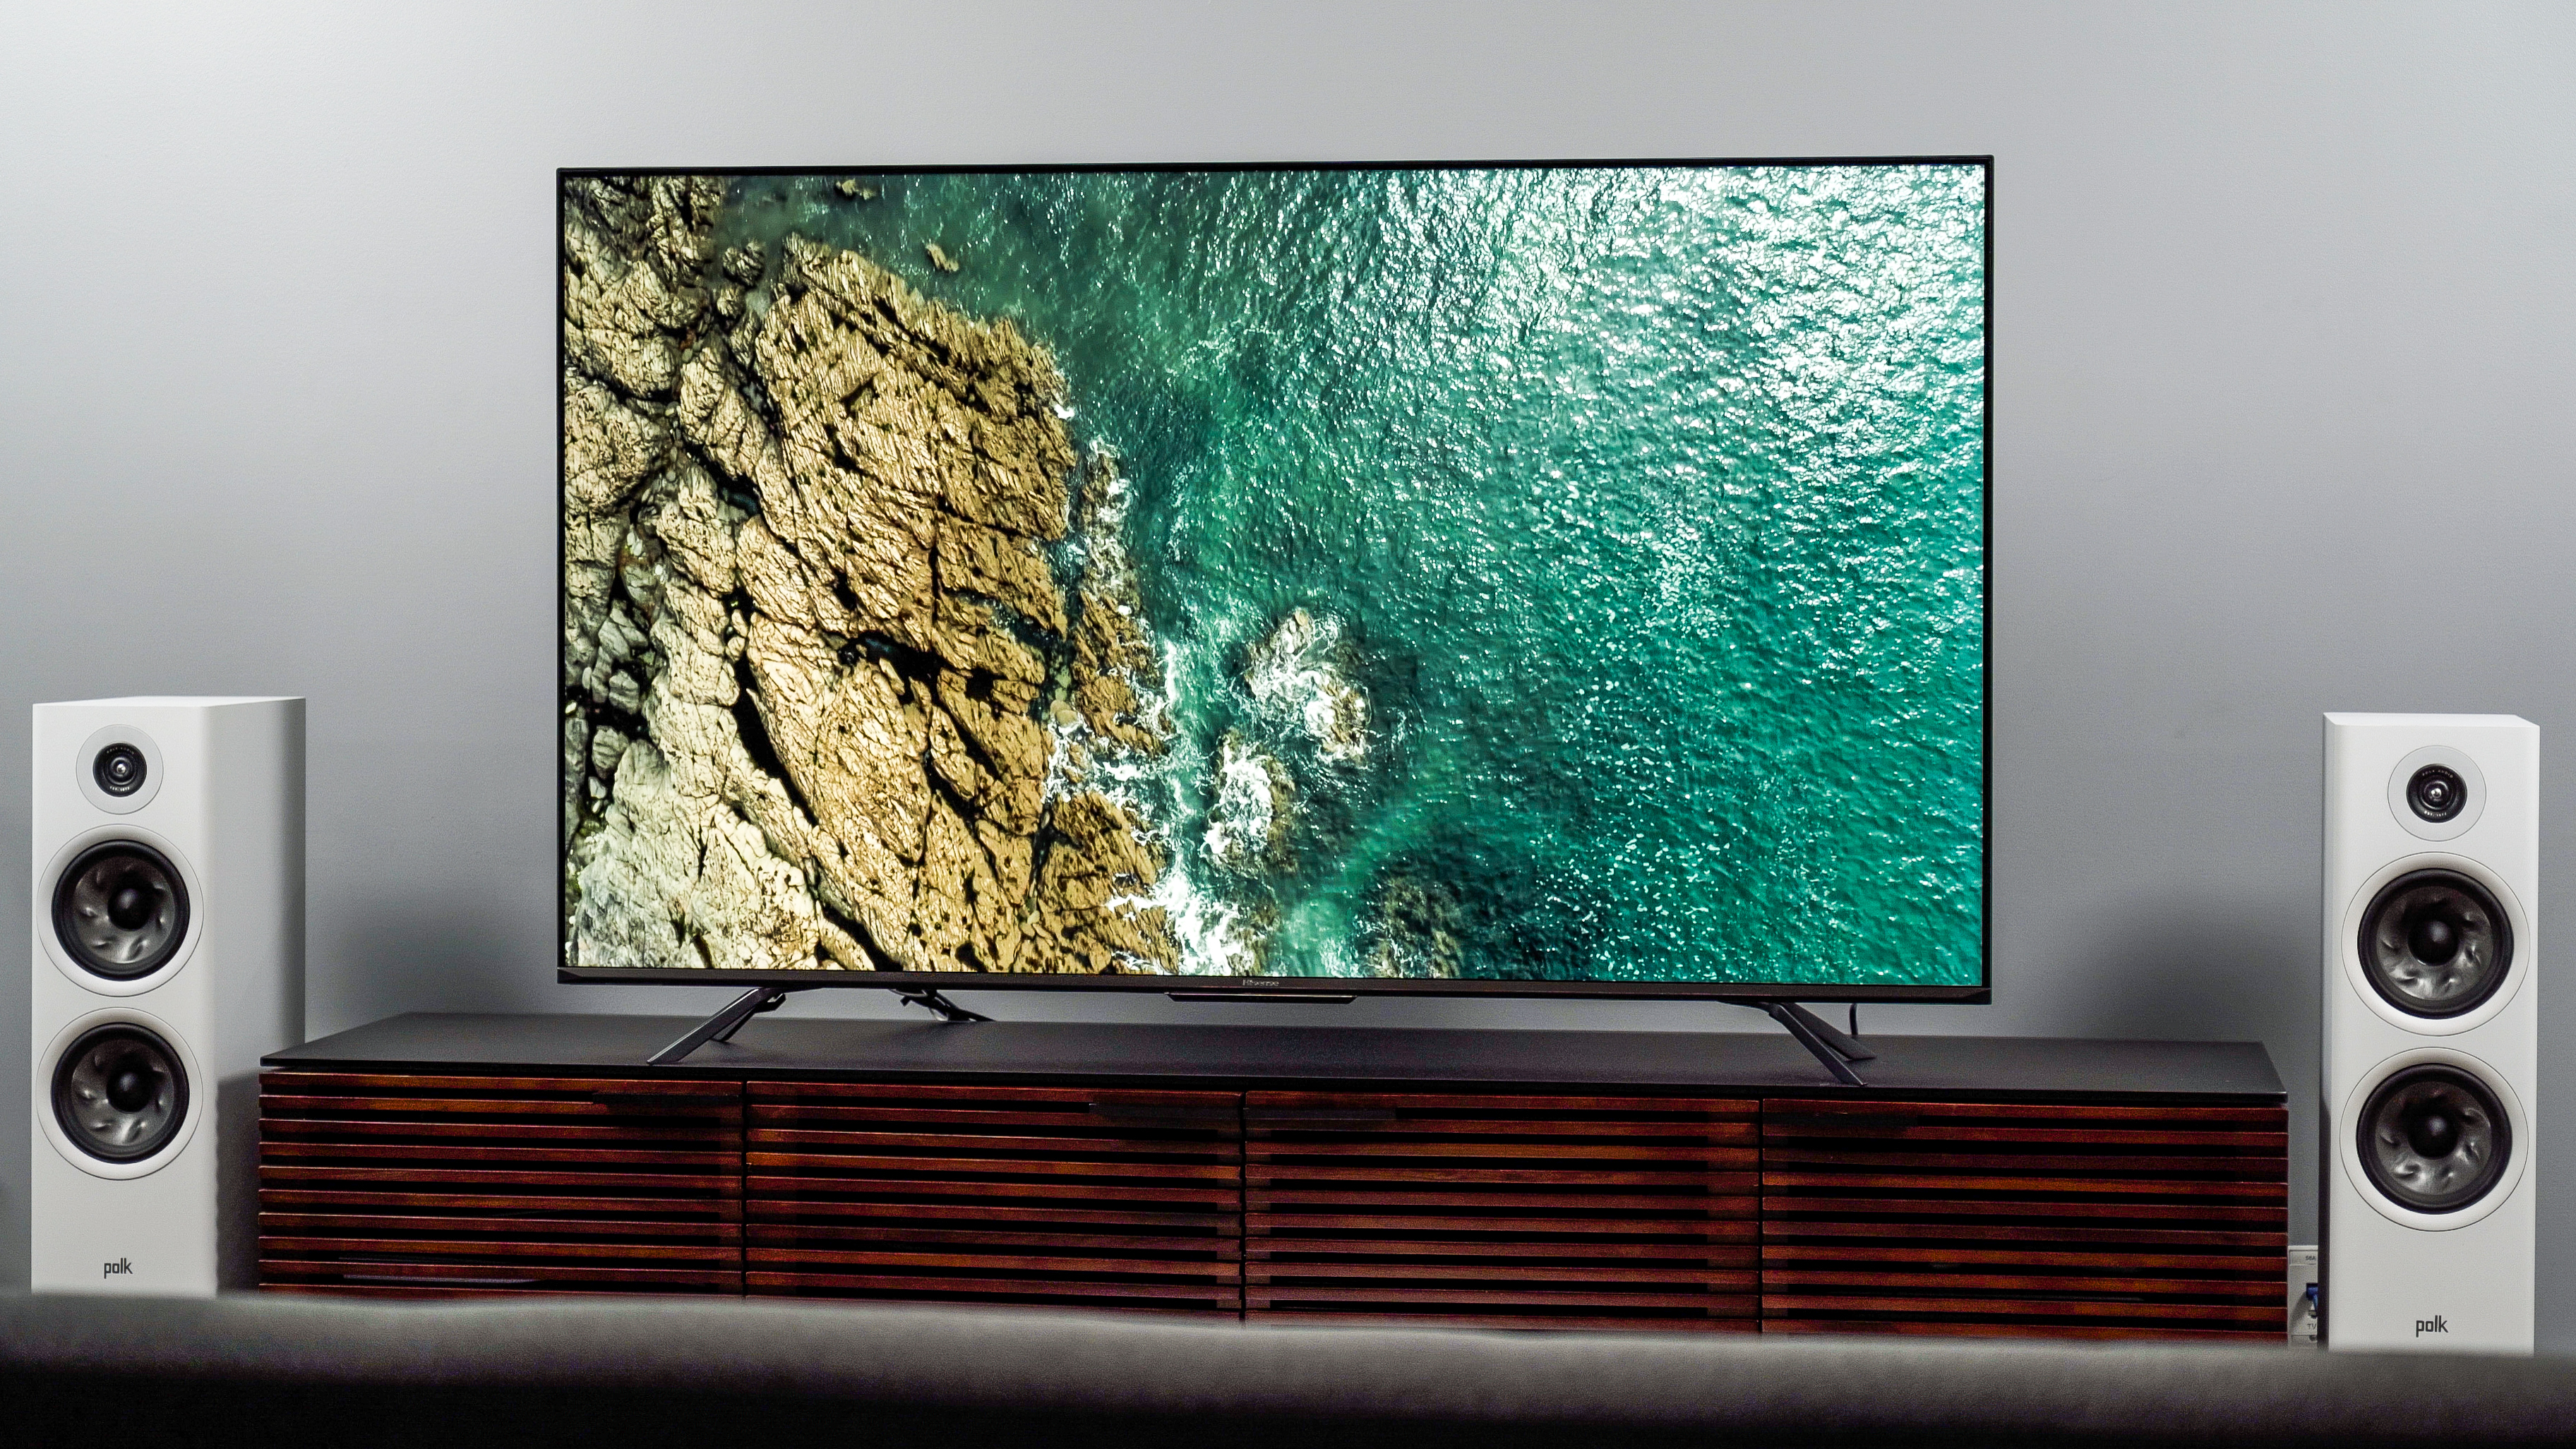 Hisense U7H Review: This 65 120Hz 4K ULED TV is Amazing! 